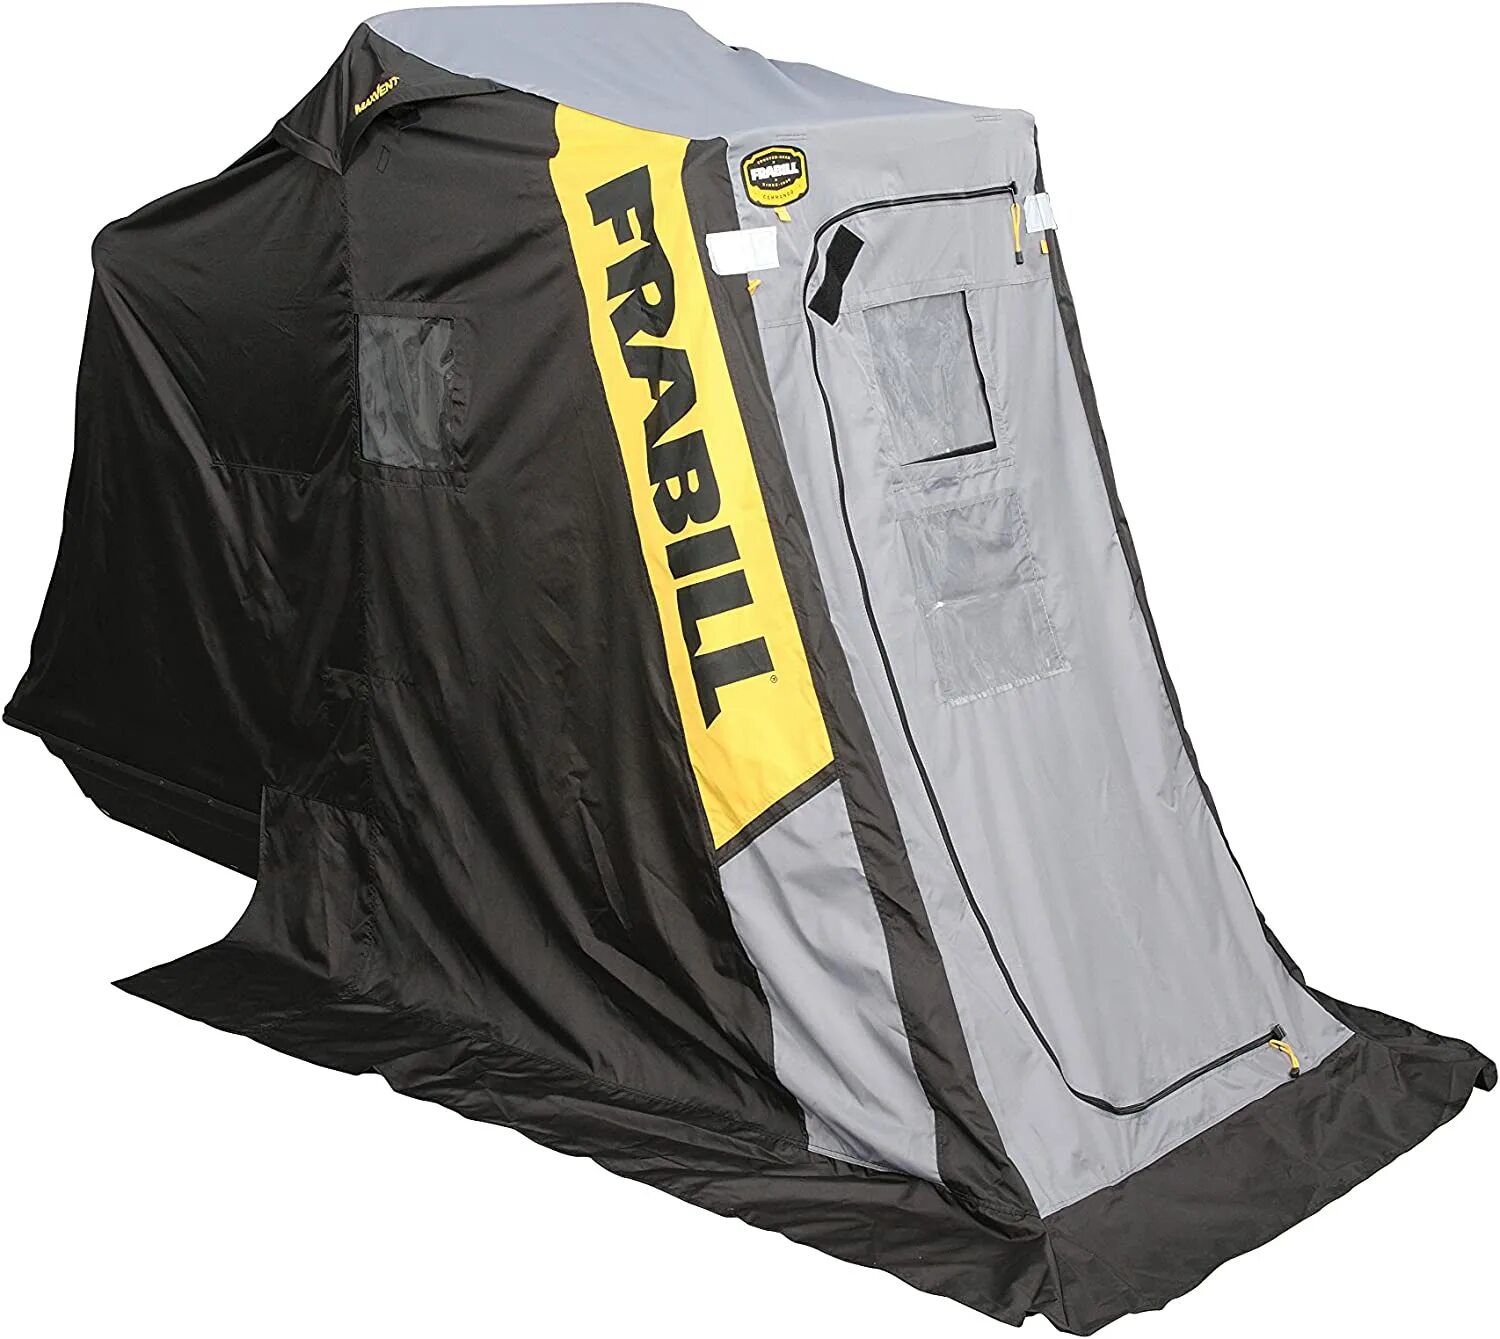 Палатка сани Frabill. Frabill Termal палатка. Палатка Frabill 2.3. Frabill Thermal Commando Ice Shelter. Купить палатку волокуши